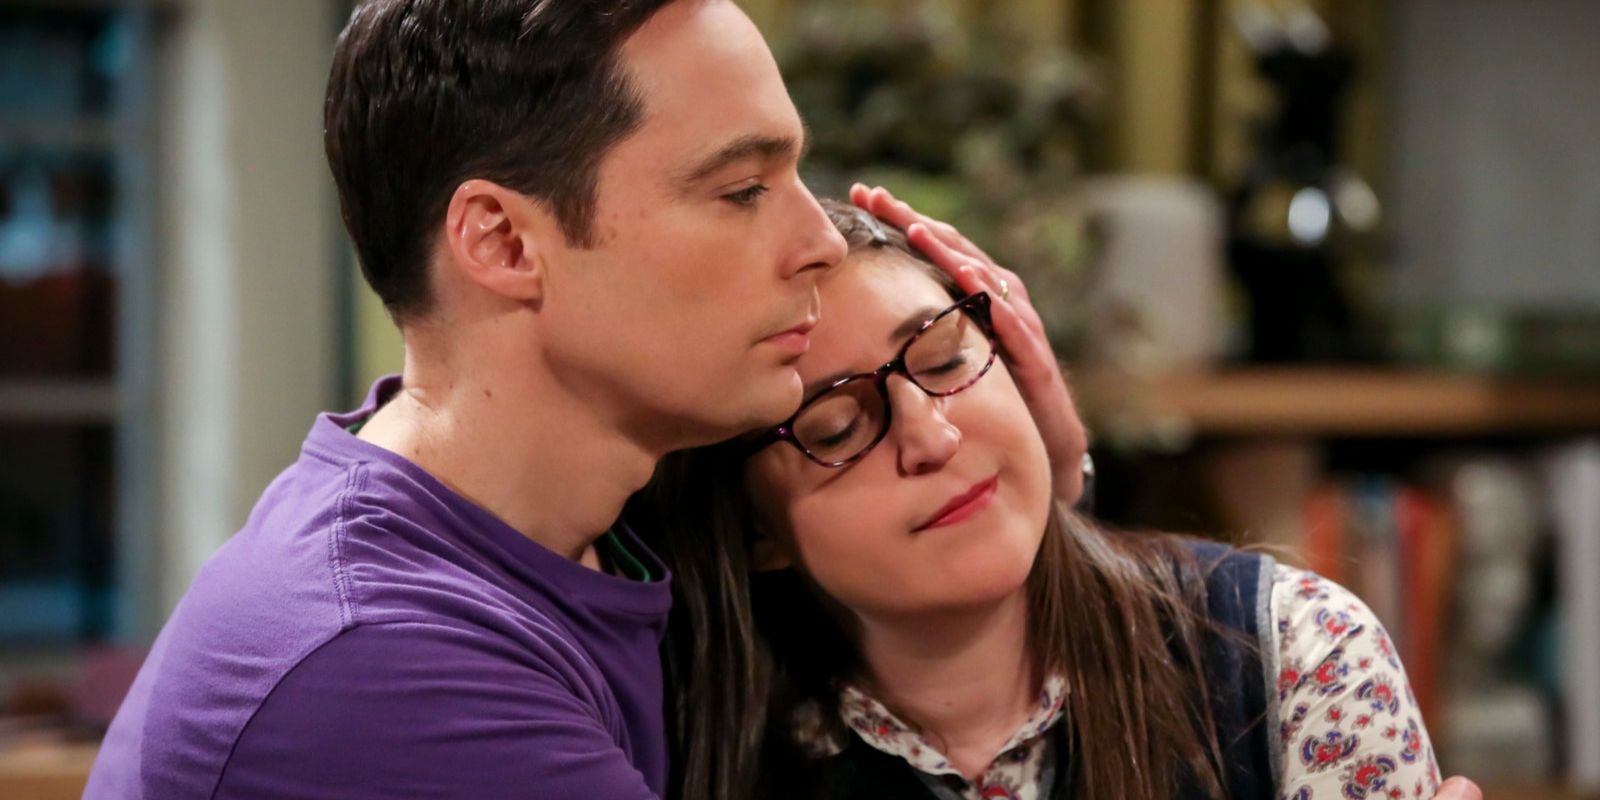 Amy resting her head on Sheldon's shoulder in TBBT